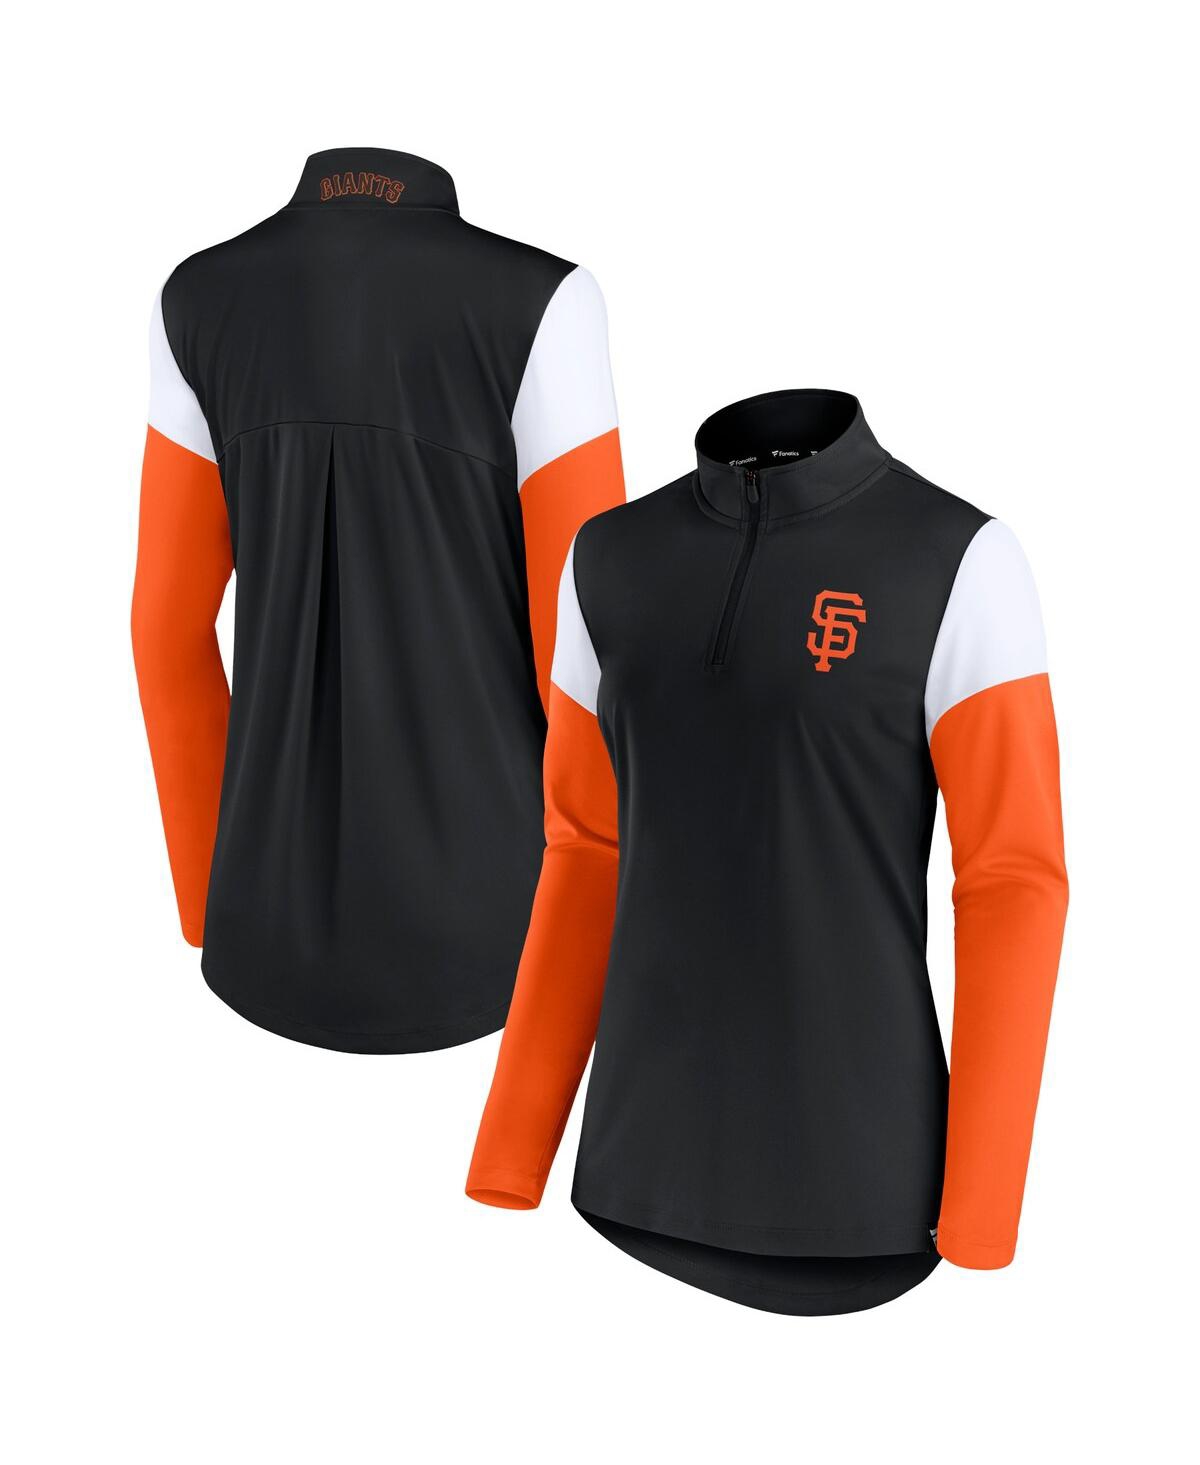 Women's Fanatics Black and Orange San Francisco Giants Authentic Fleece Quarter-Zip Jacket - Black, Orange